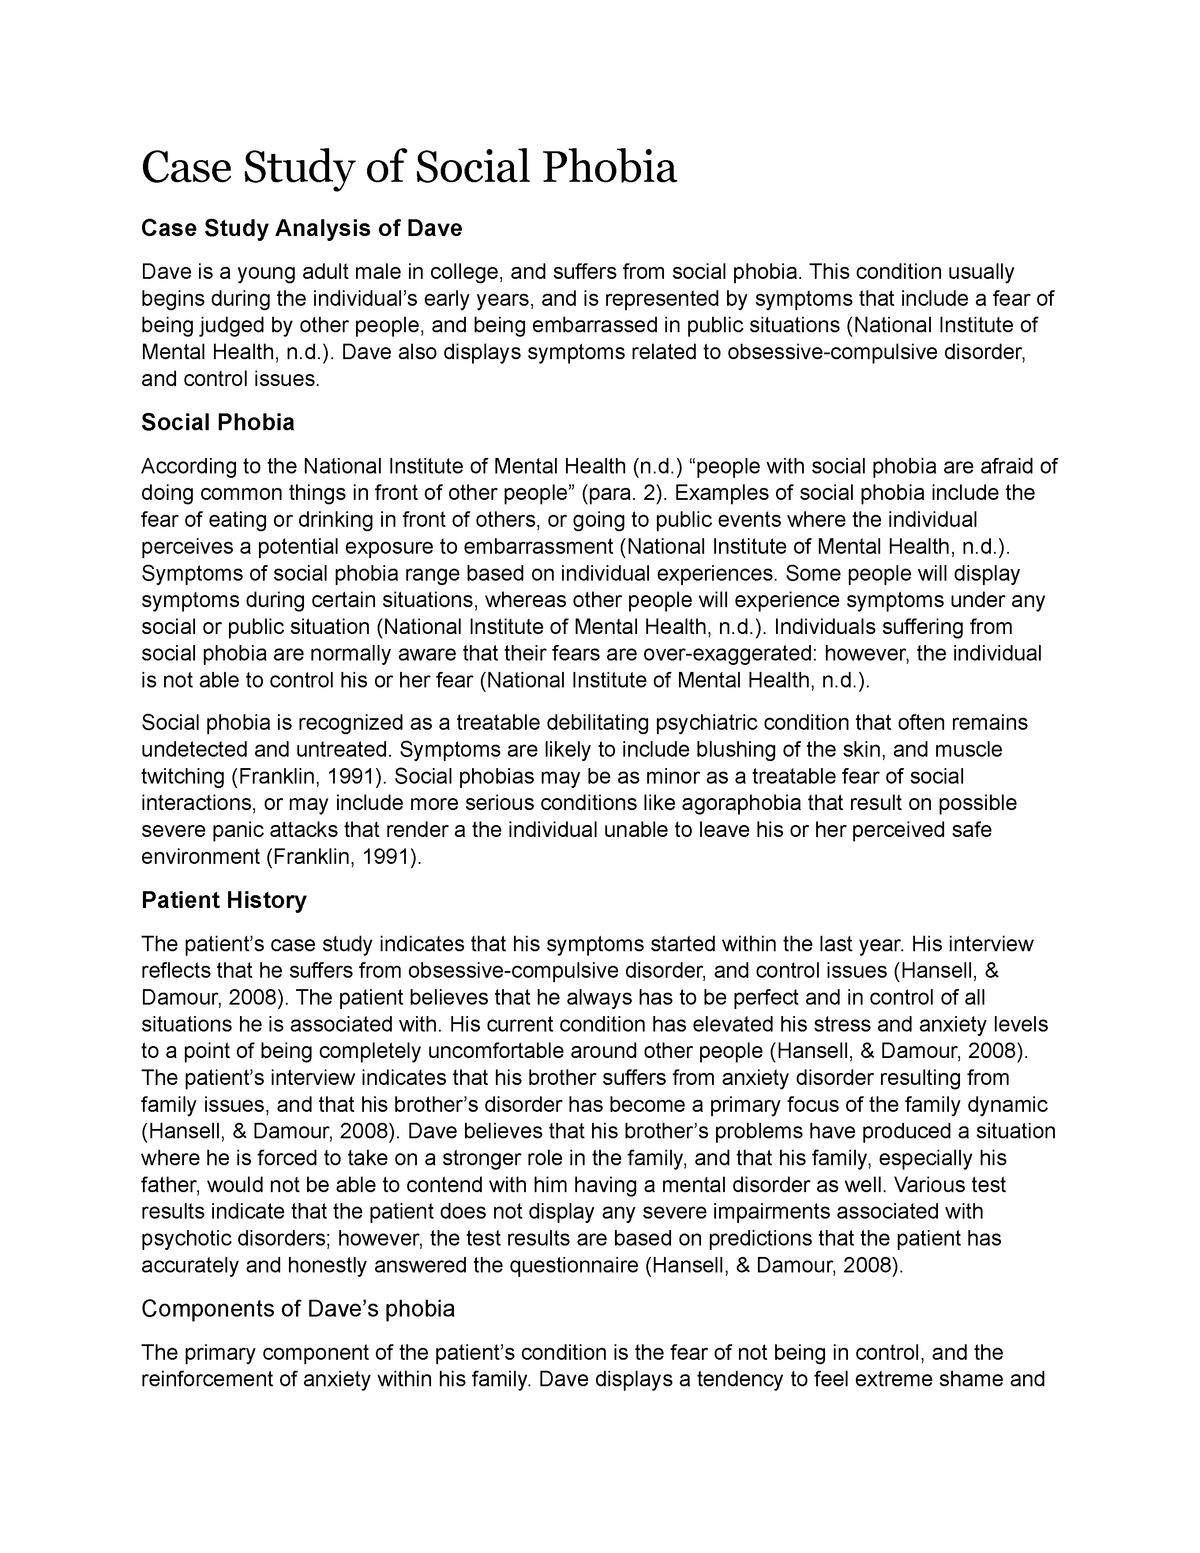 social phobia case study pdf